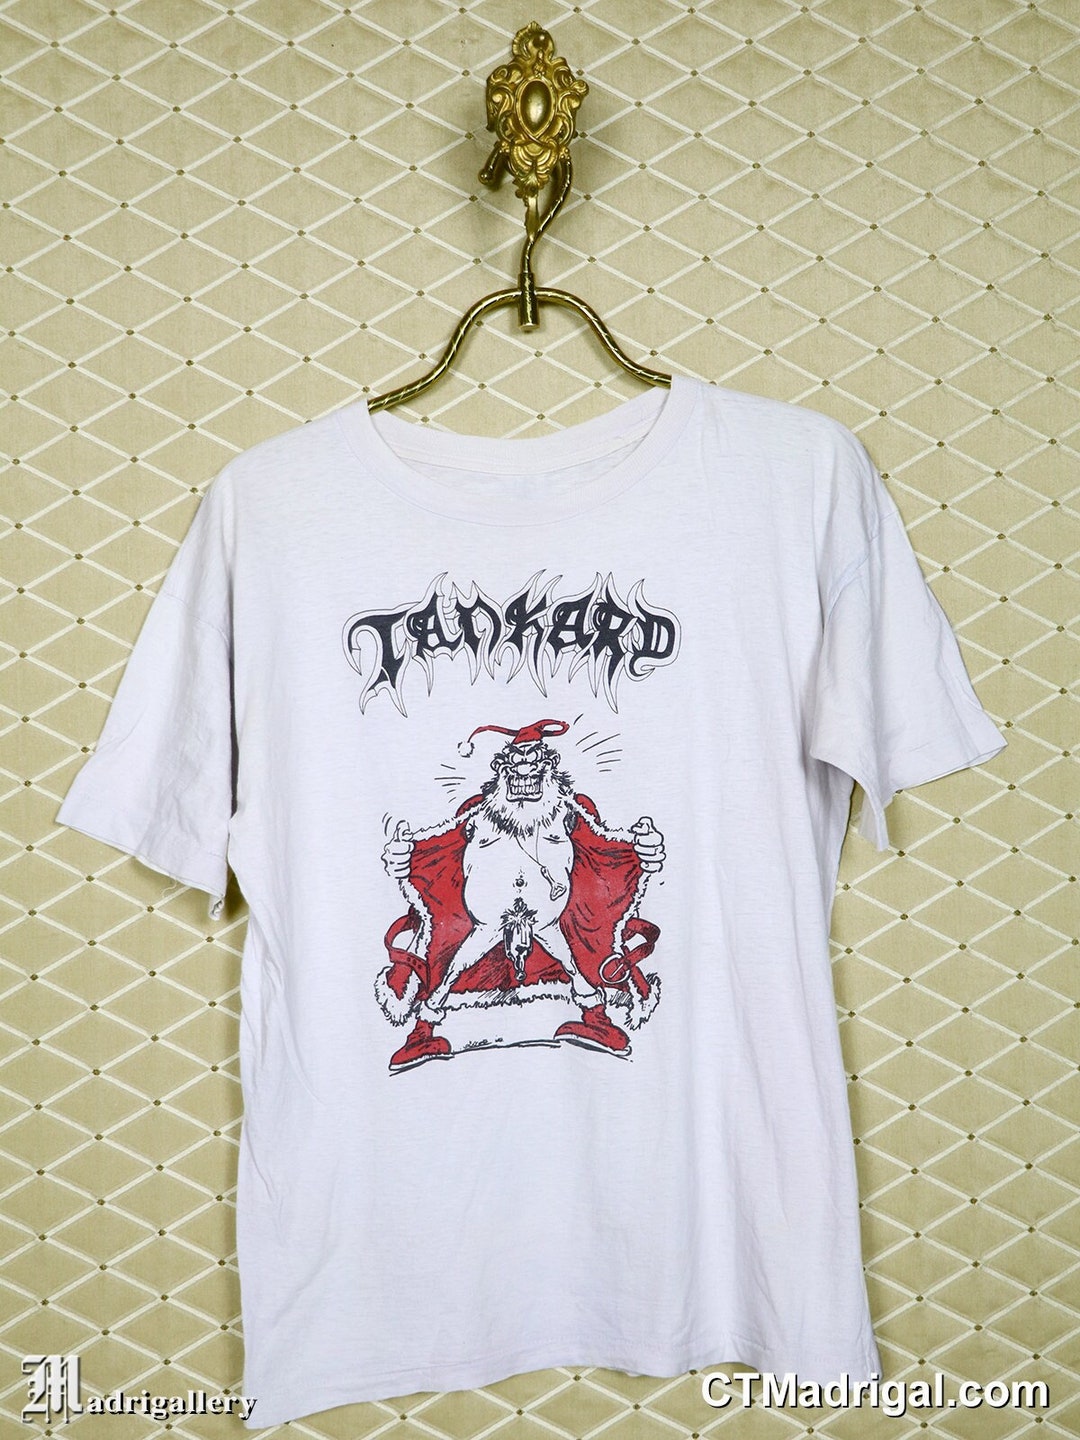 Accor Skur myndighed Tankard t-shirt vintage rare tee shirt thrash metal Sodom - Etsy 日本